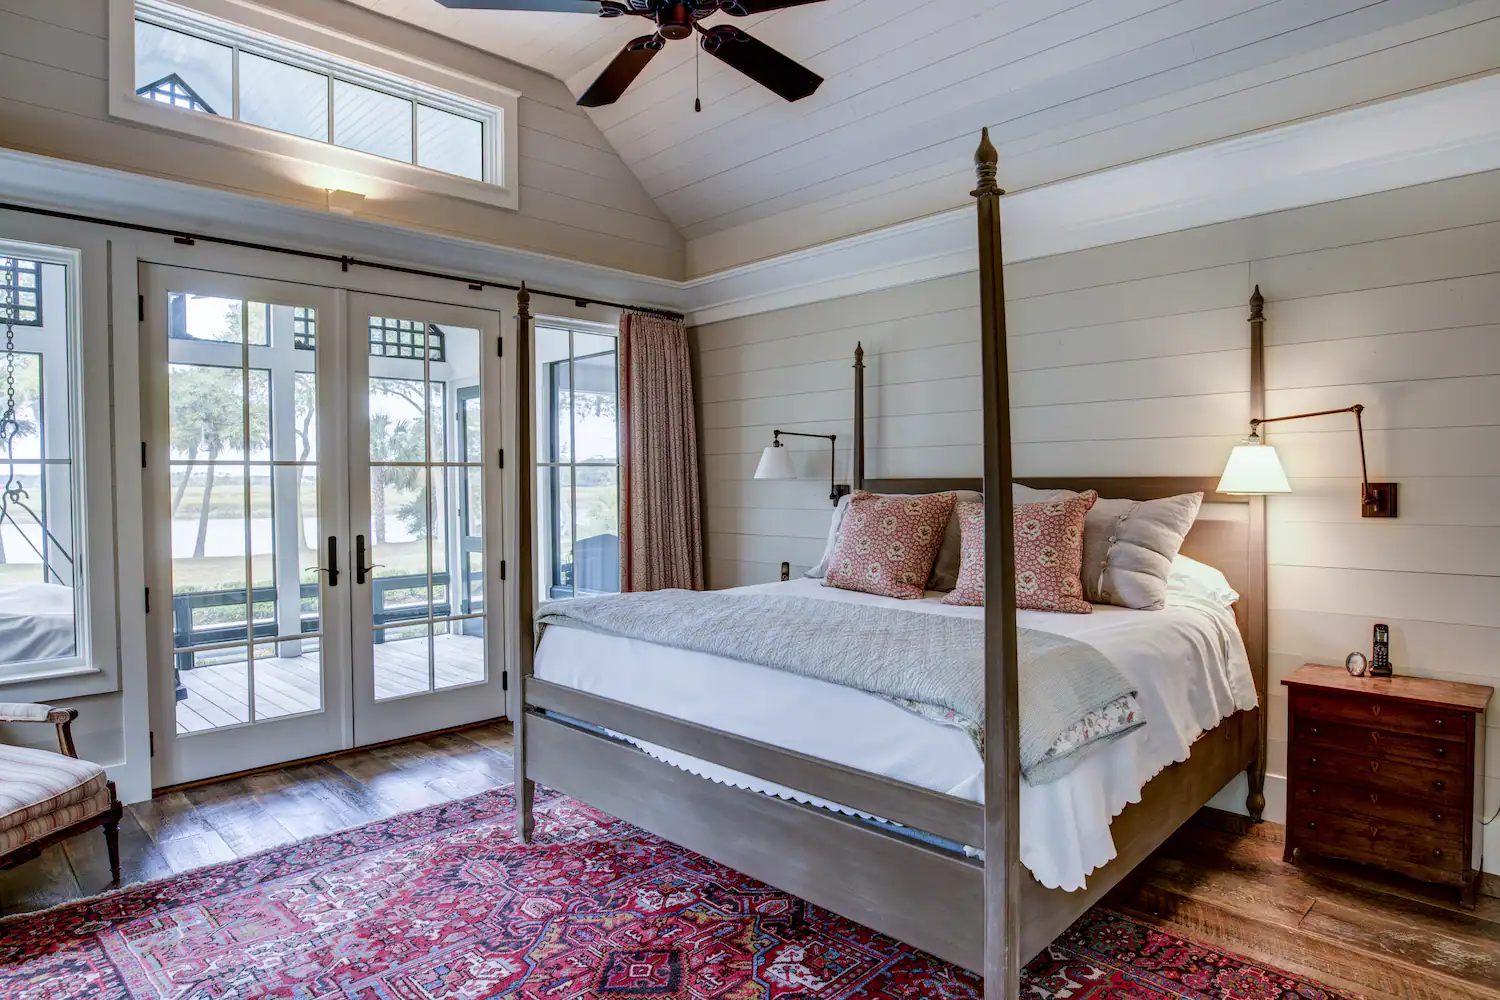 12 Key Elements to Design Modern Farmhouse Bedroom